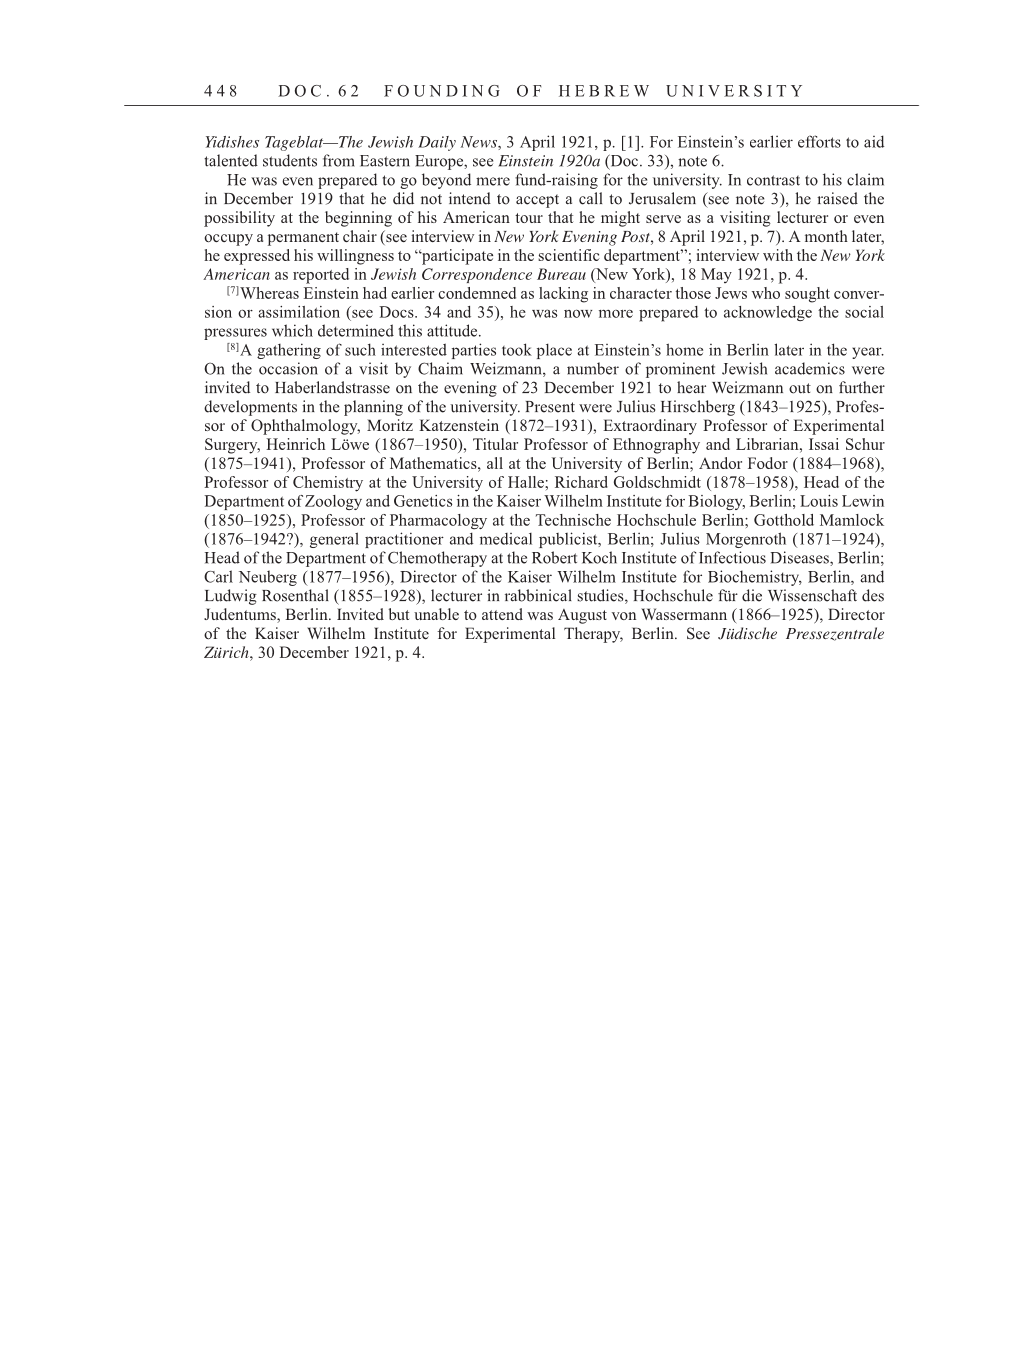 Volume 7: The Berlin Years: Writings, 1918-1921 page 448